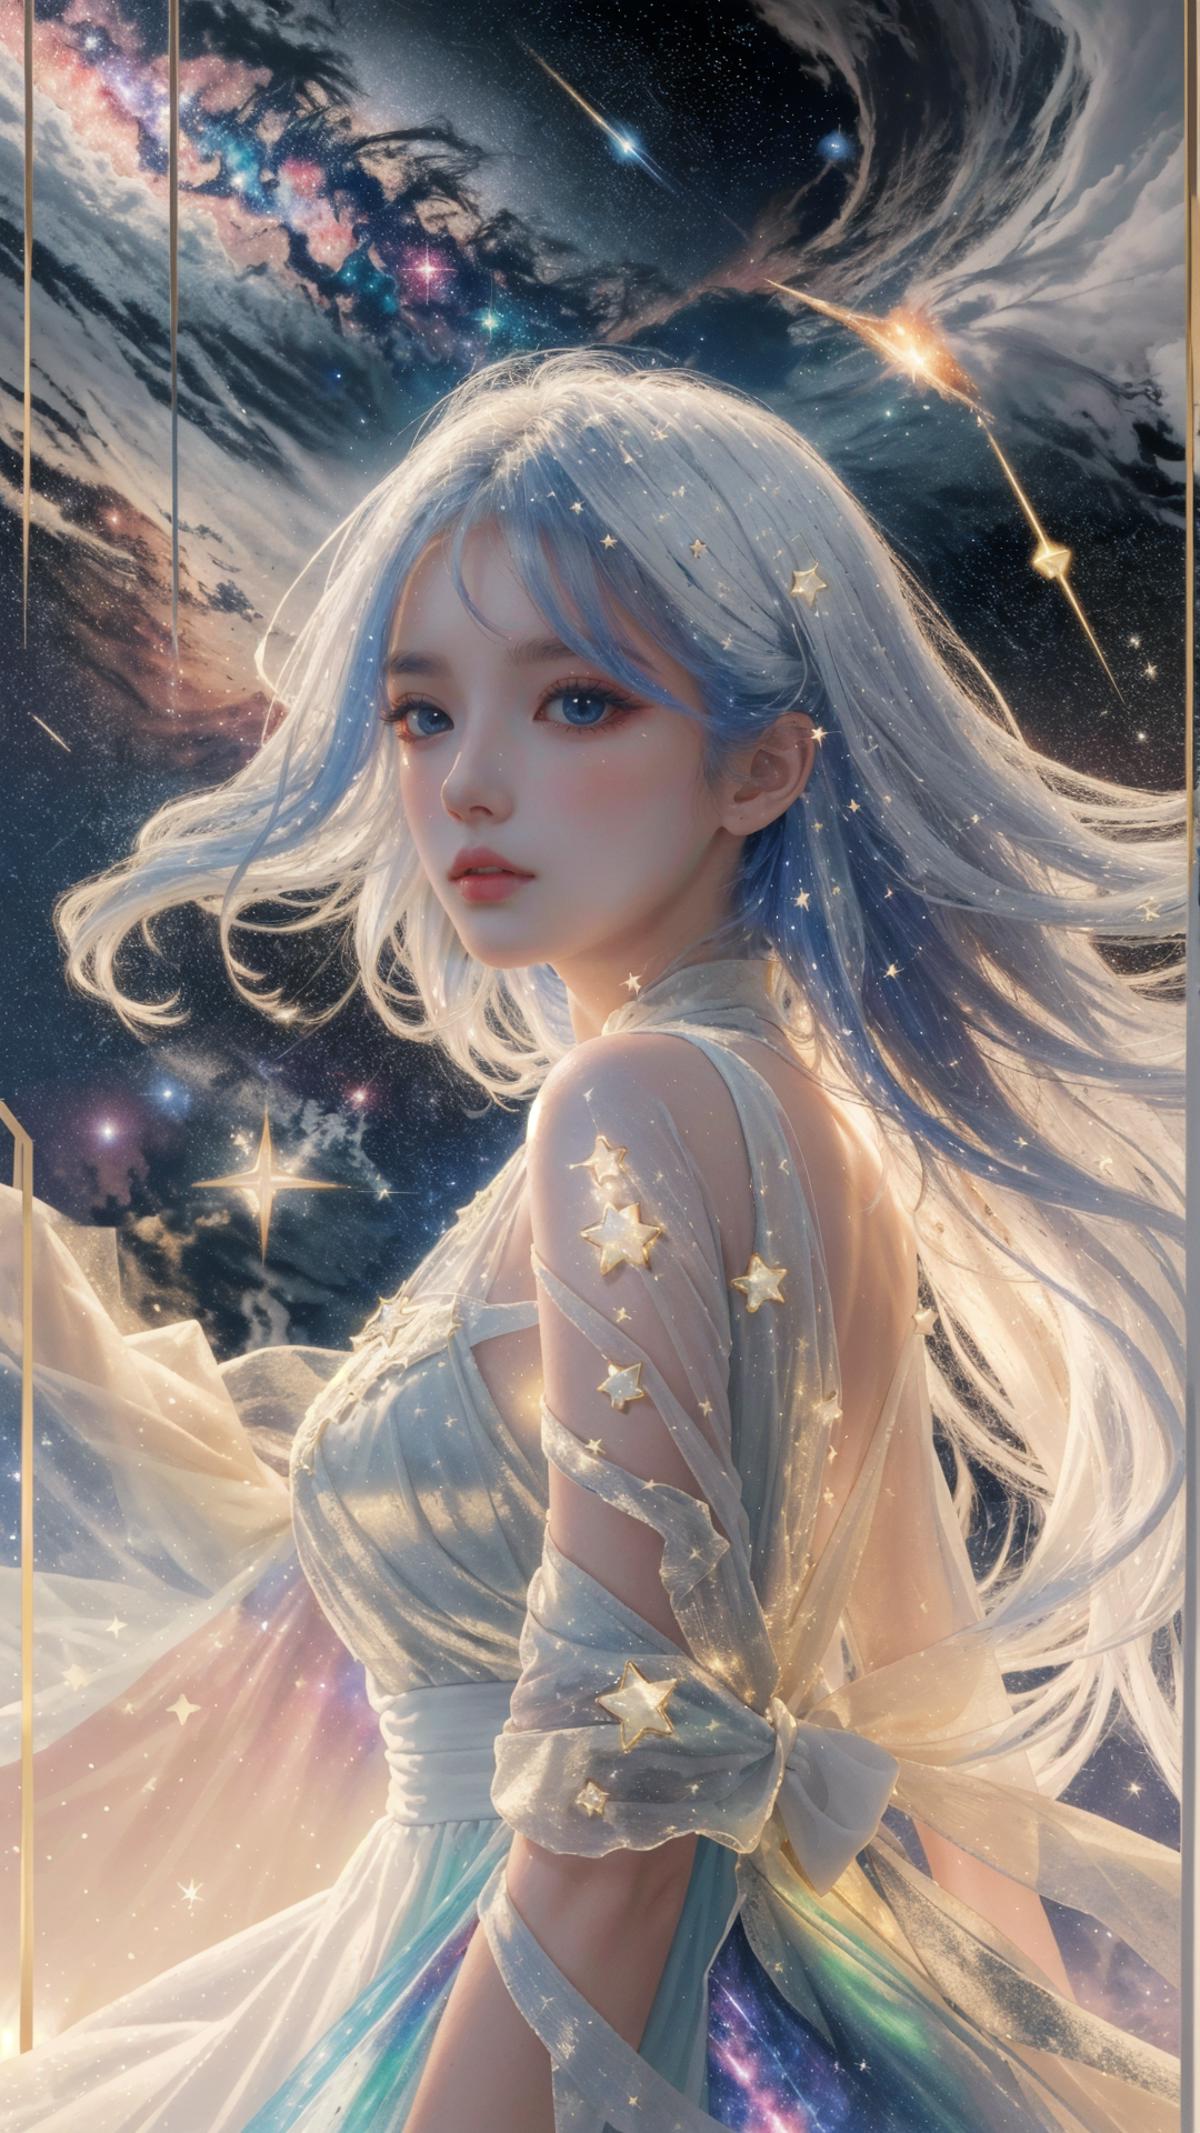 繁星若梦 Starry Dreams image by XiuAI